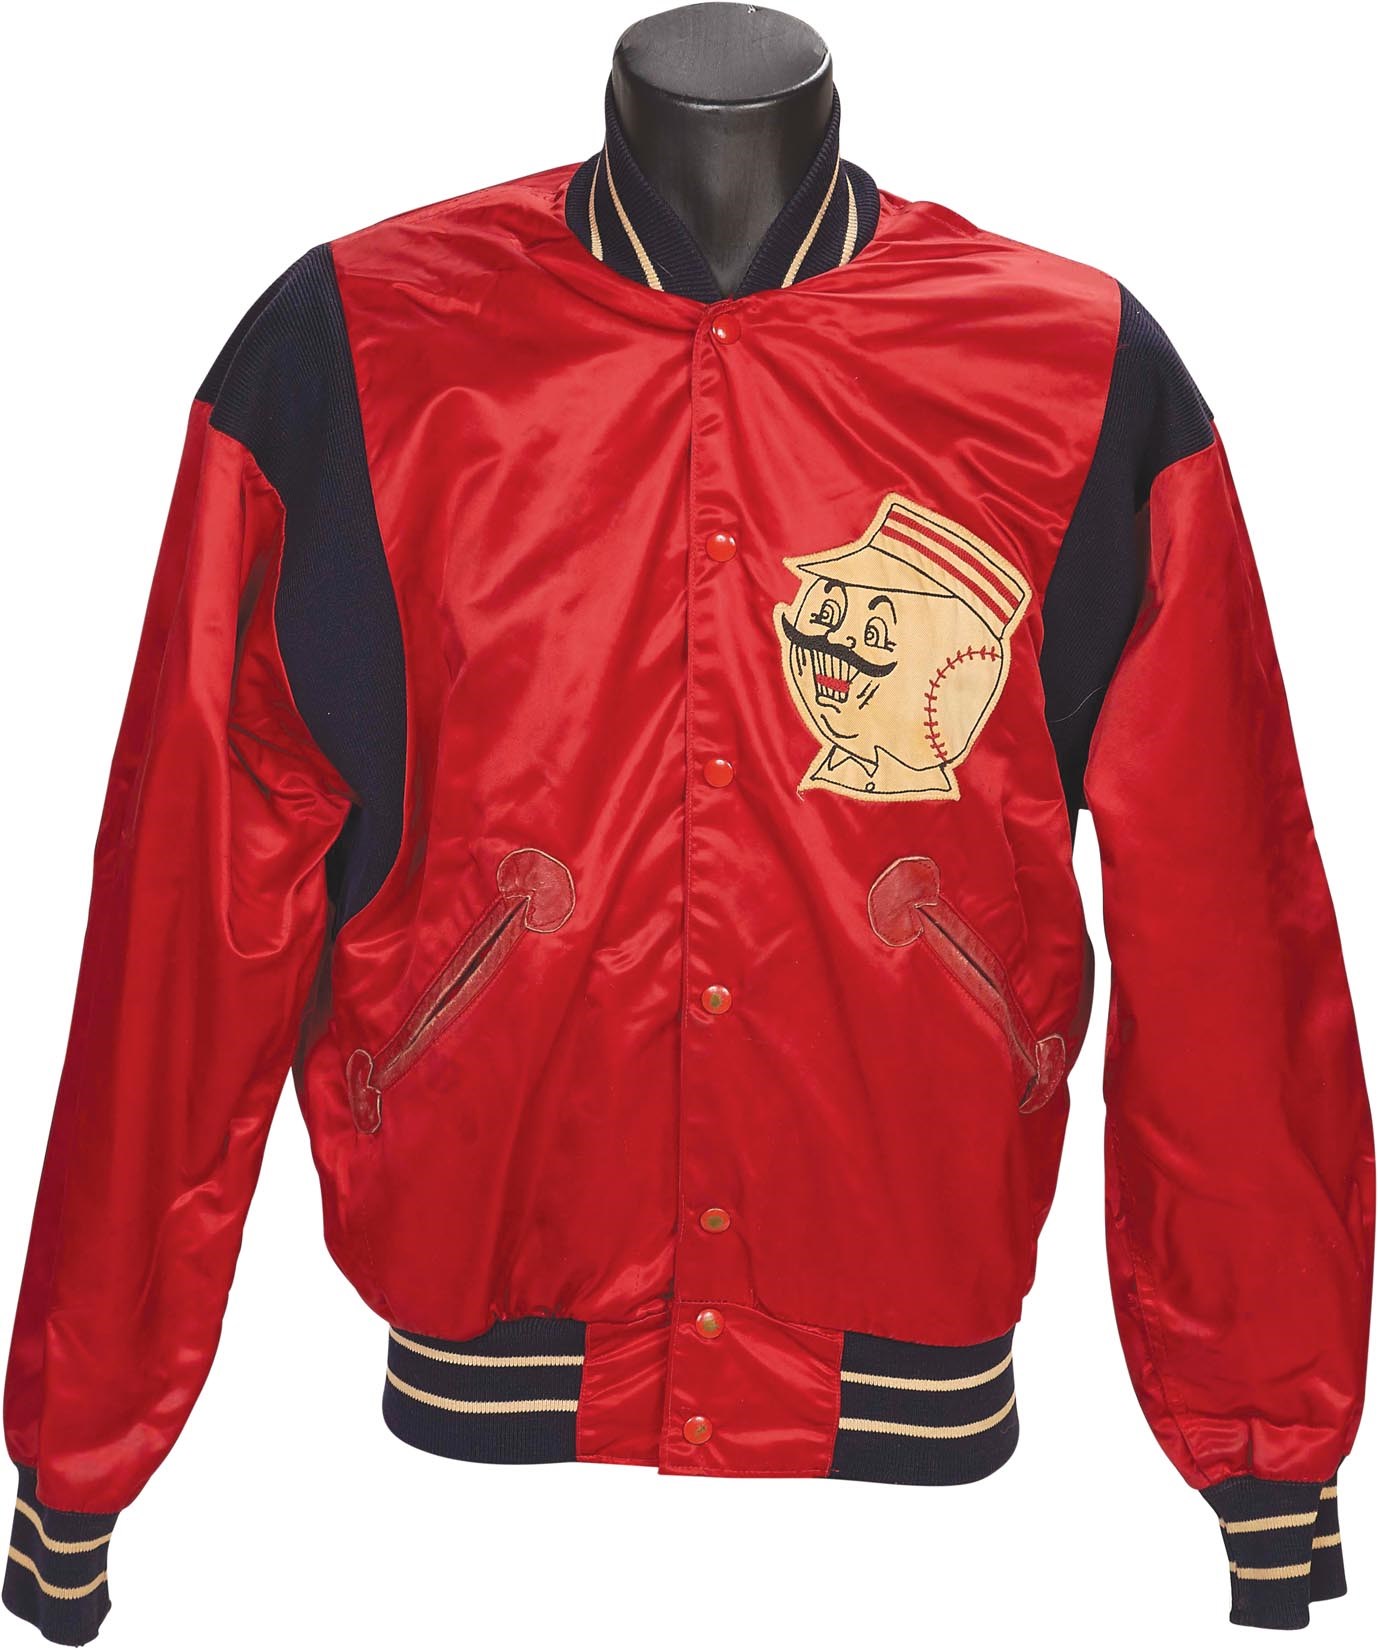 - 1962 Leo Cardenas Cincinnati Reds Jacket